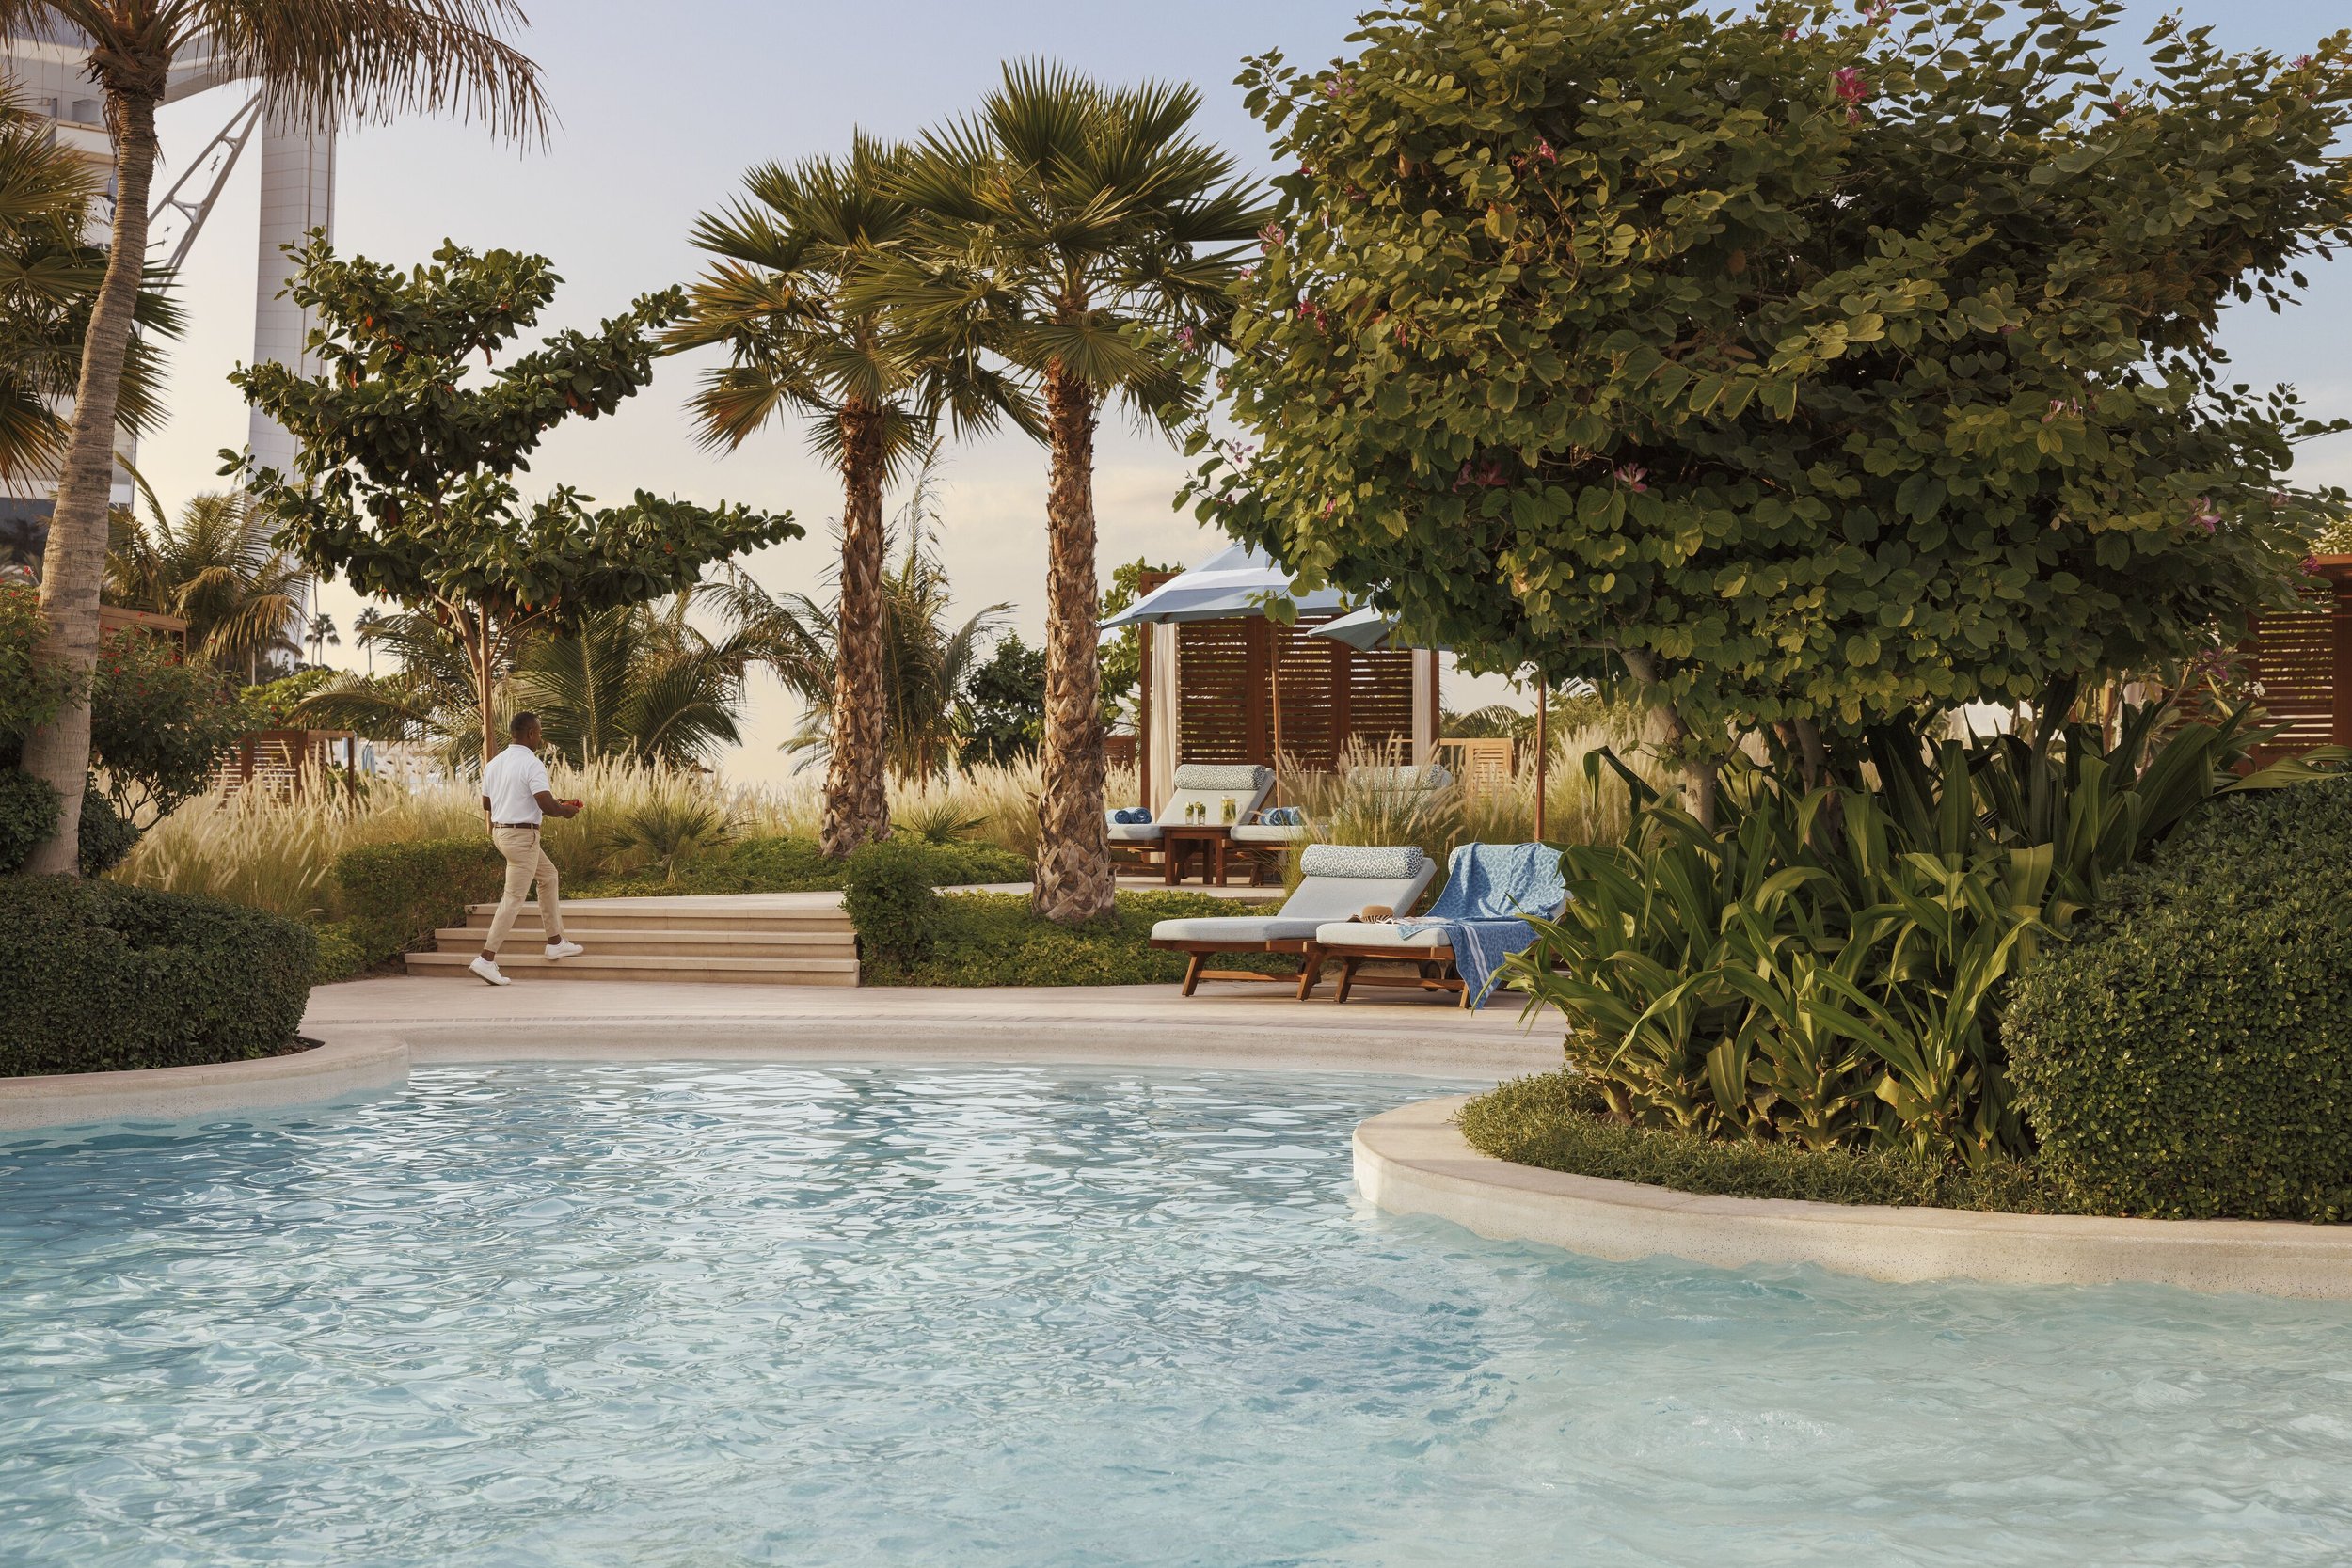 Medium_resolution_150dpi-Jumeirah Beach Hotel - Facilities - Executive Pool - Service 001.jpg